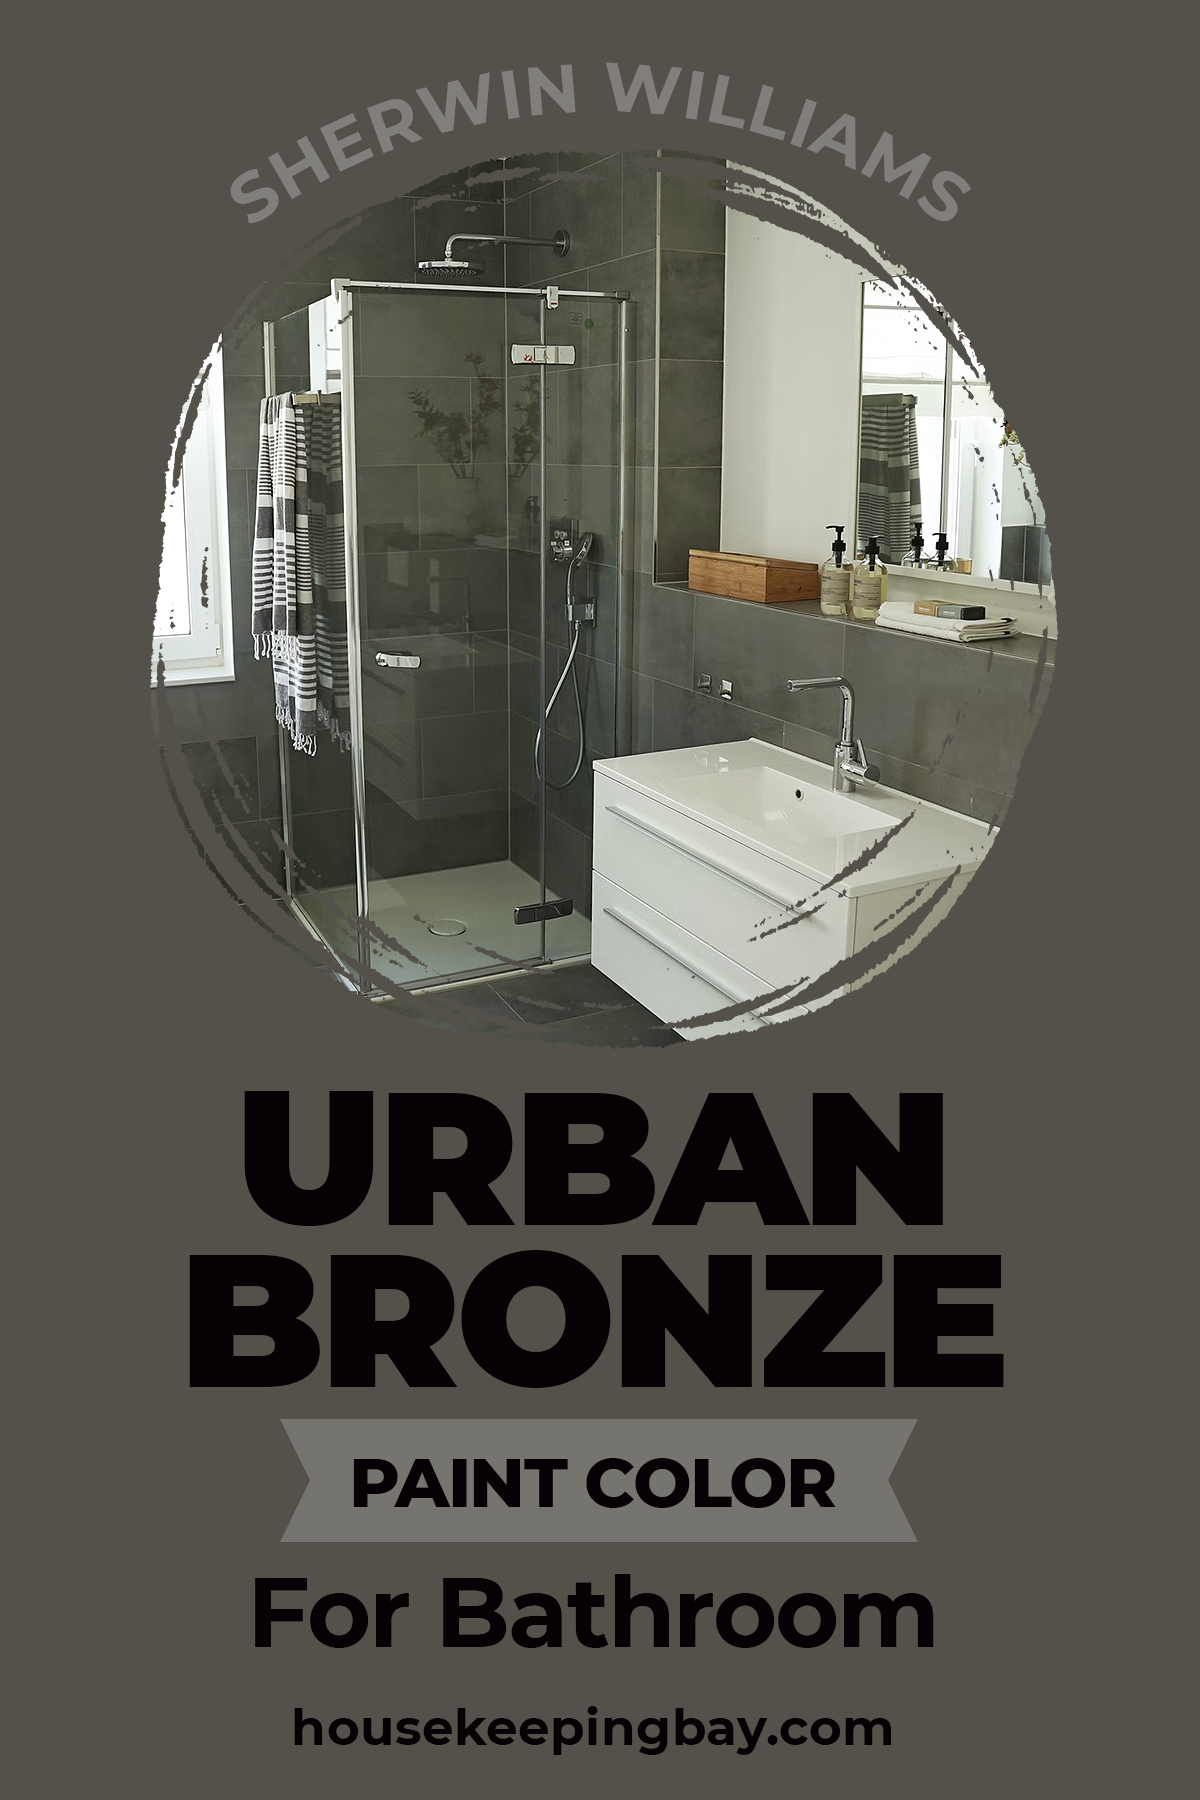 Urban Bronze Paint Color for bathroom